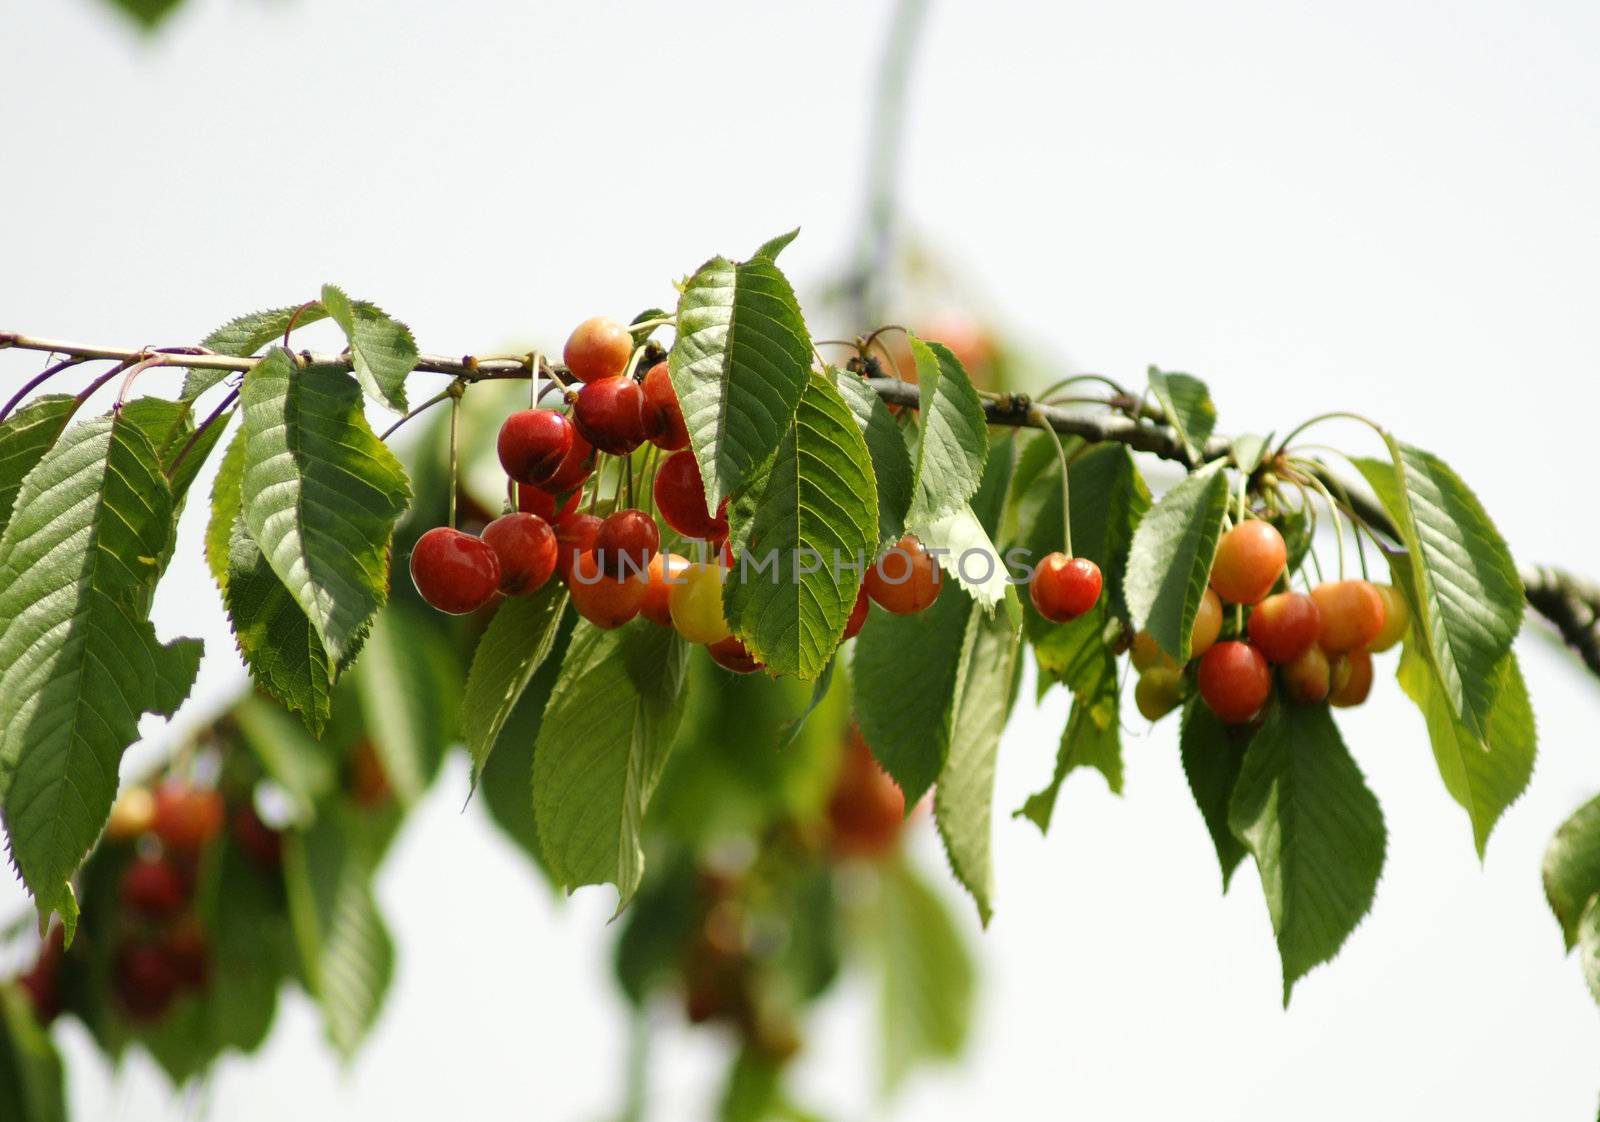 cherries on branches by pixelman